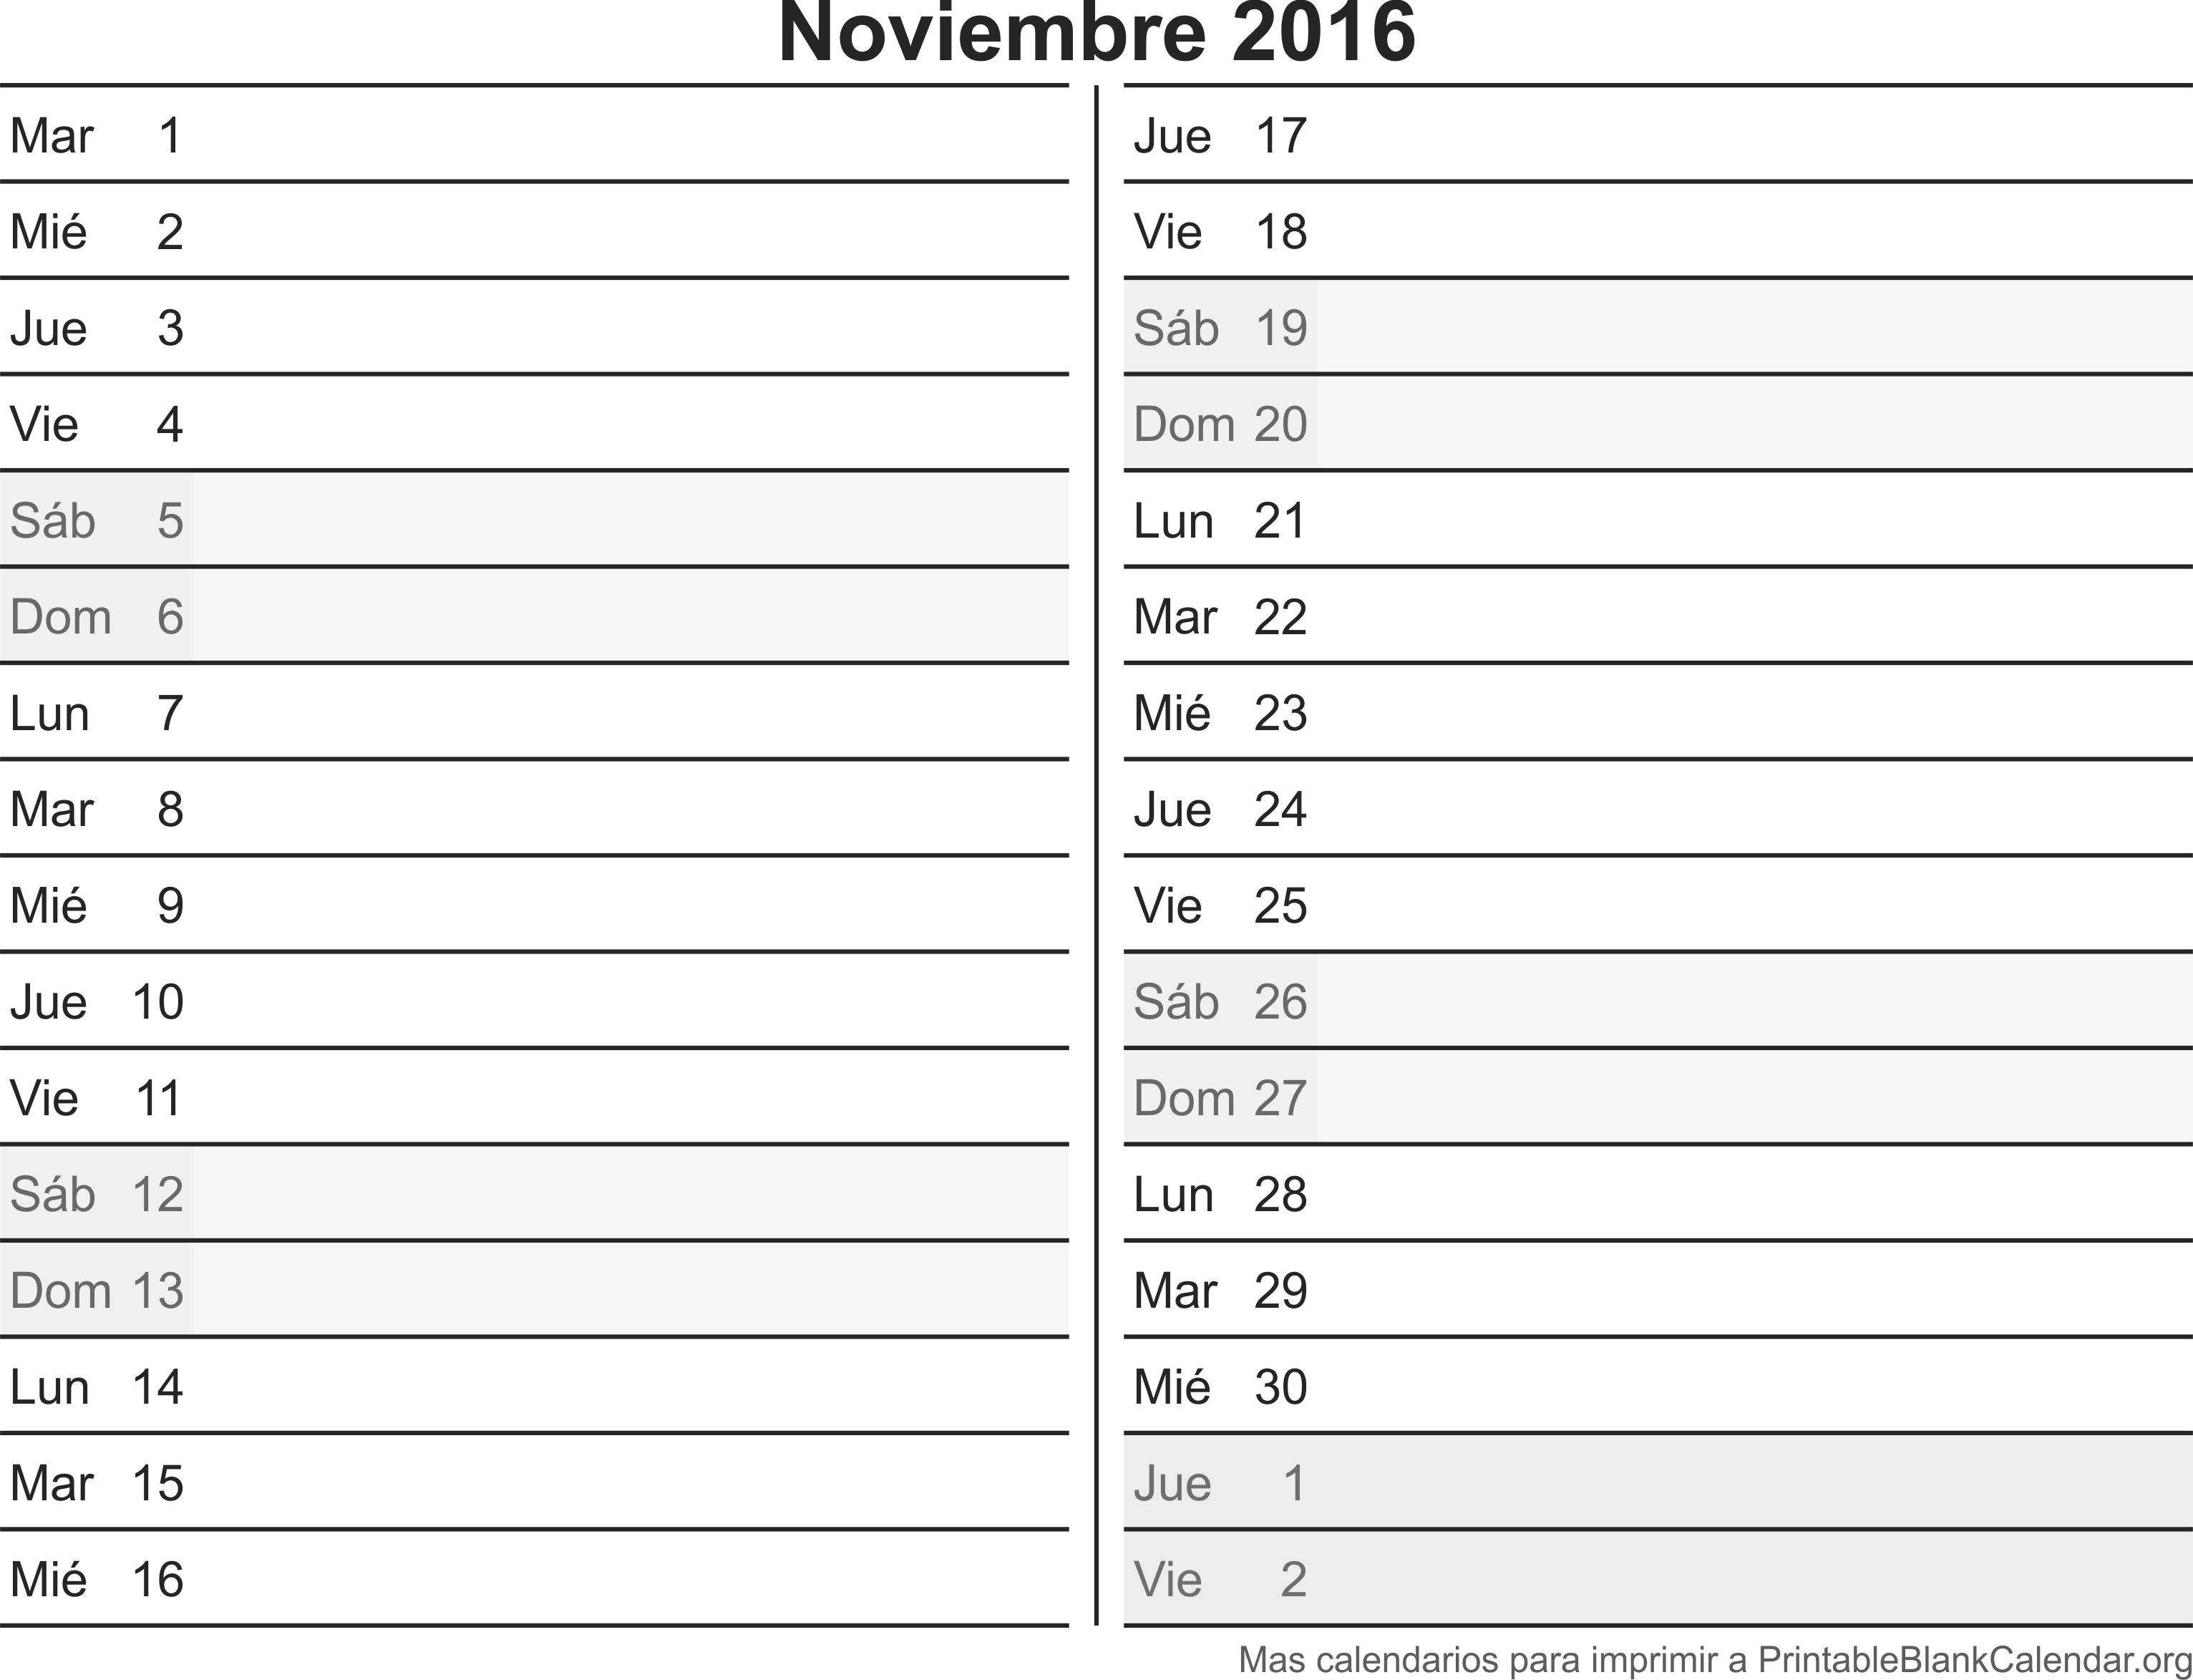 calendario para imprimir nov 2016